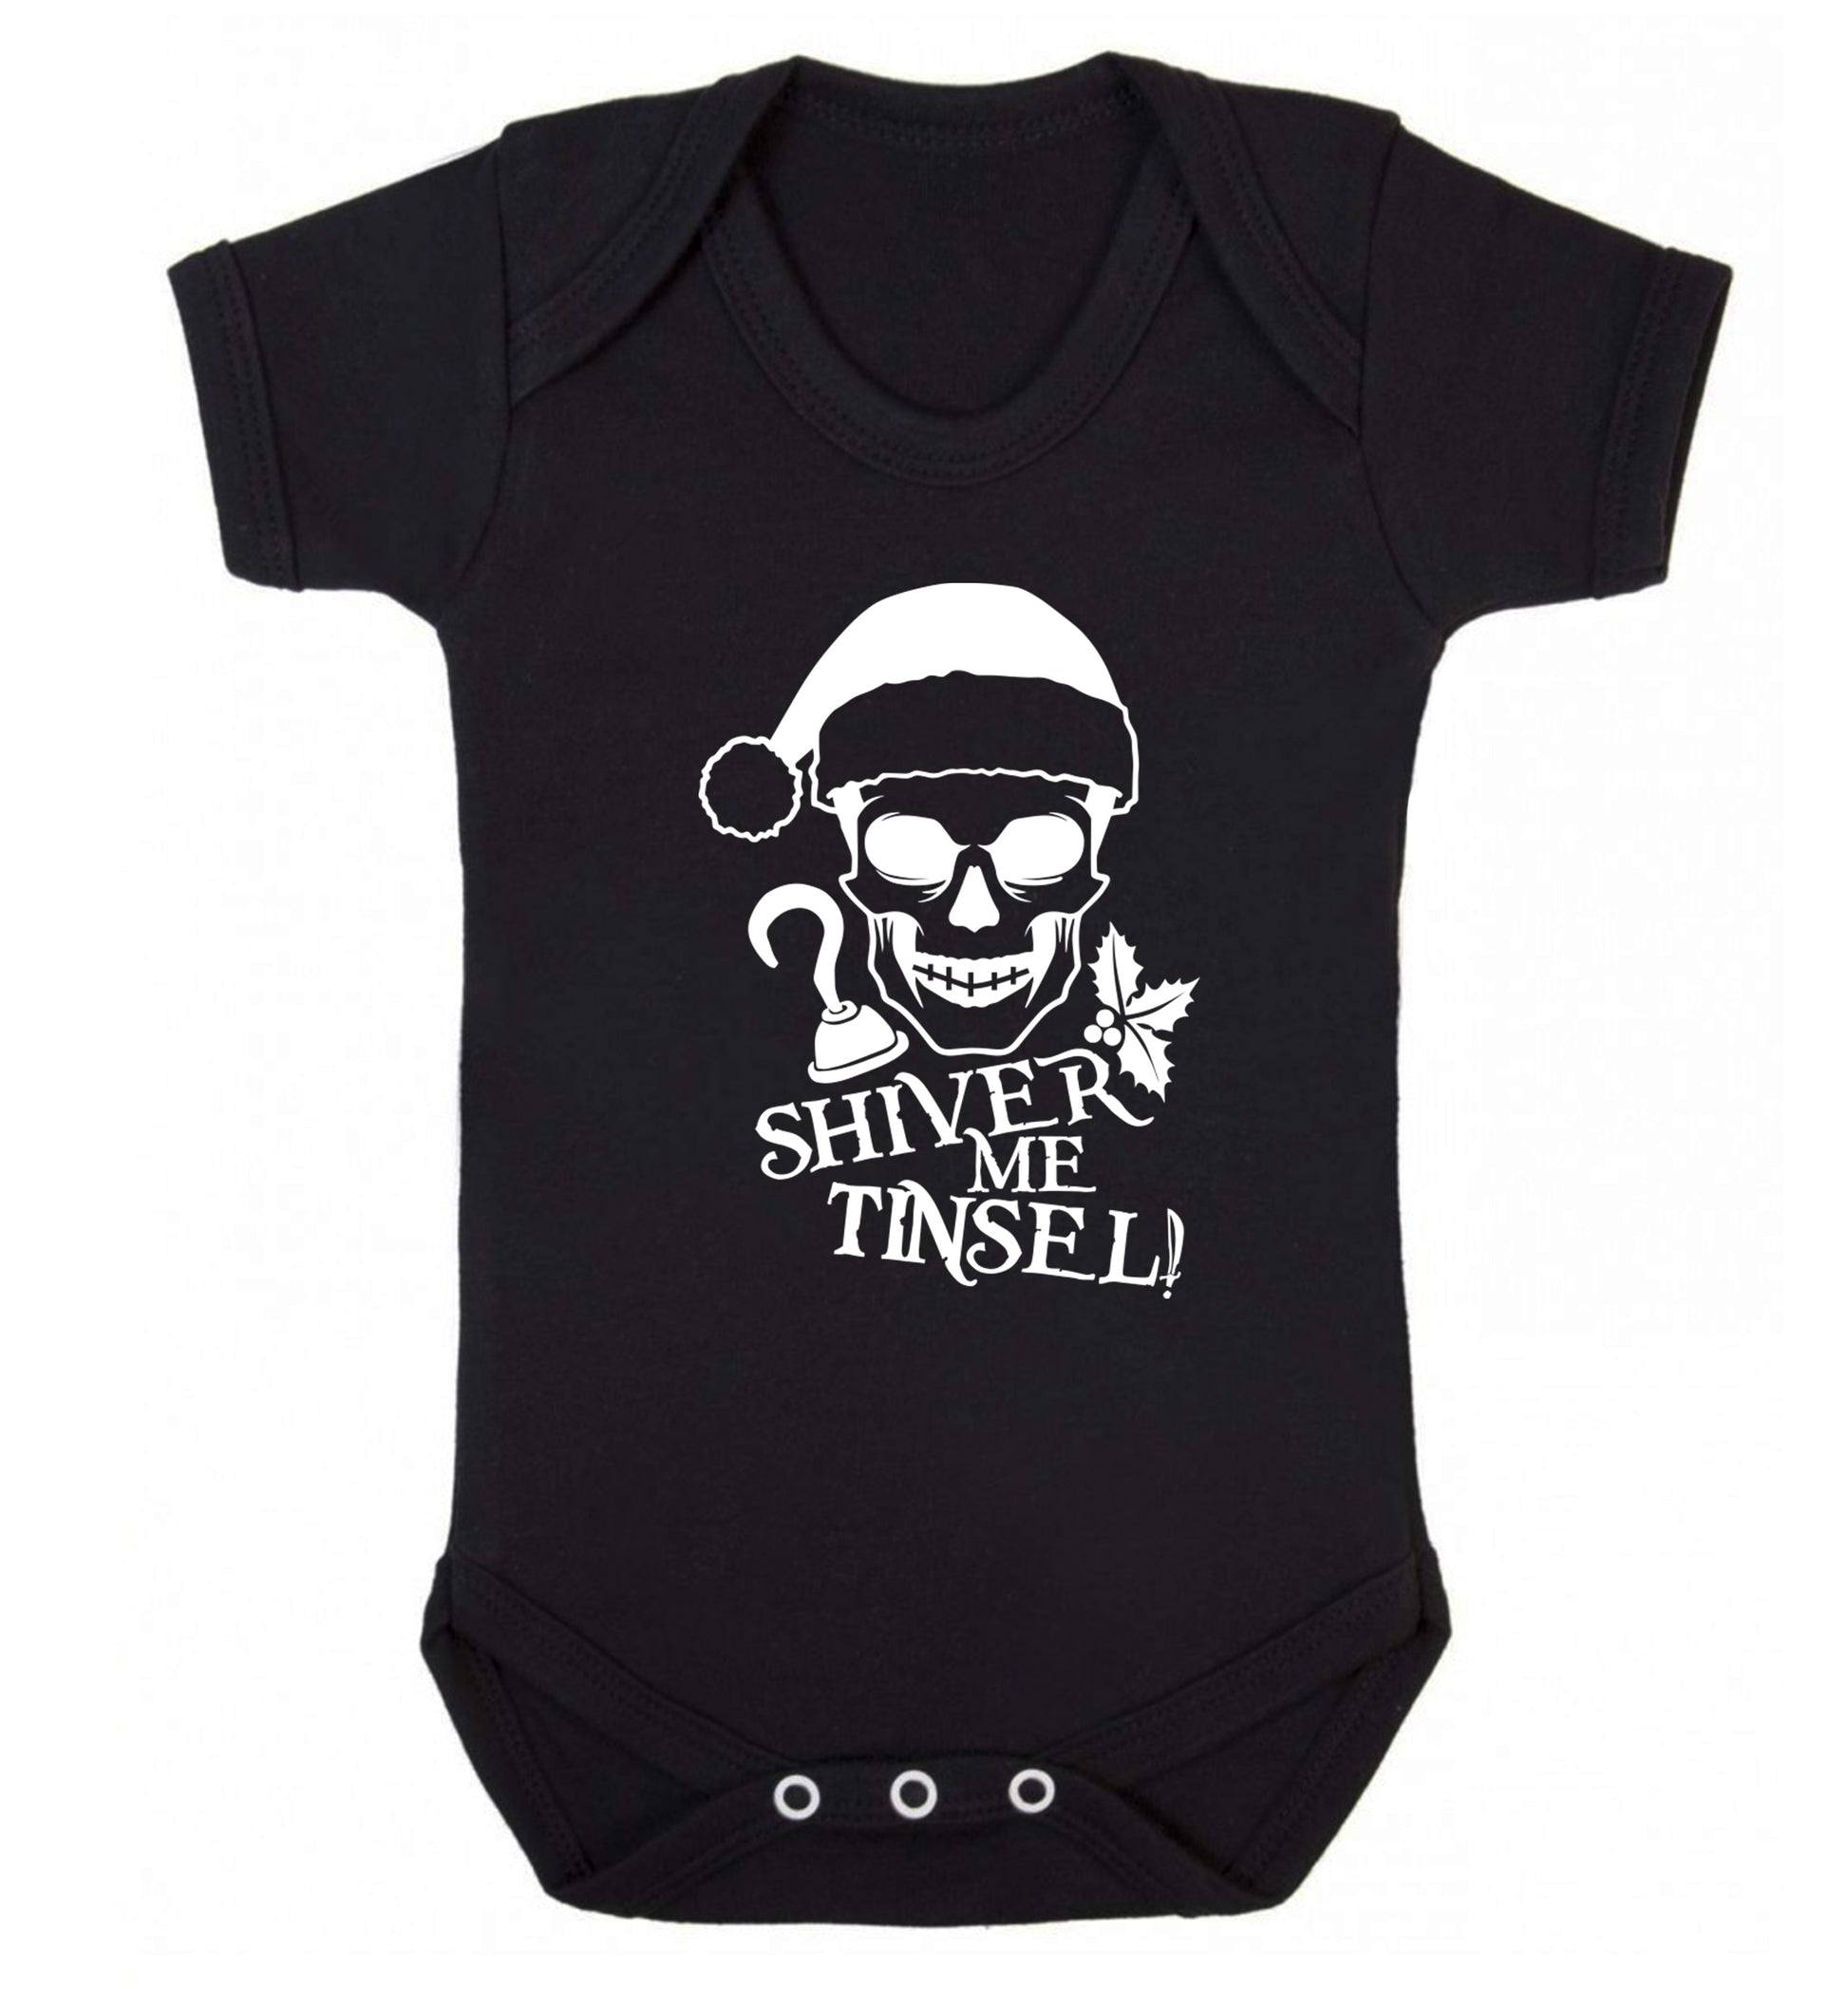 Shiver me tinsel Baby Vest black 18-24 months